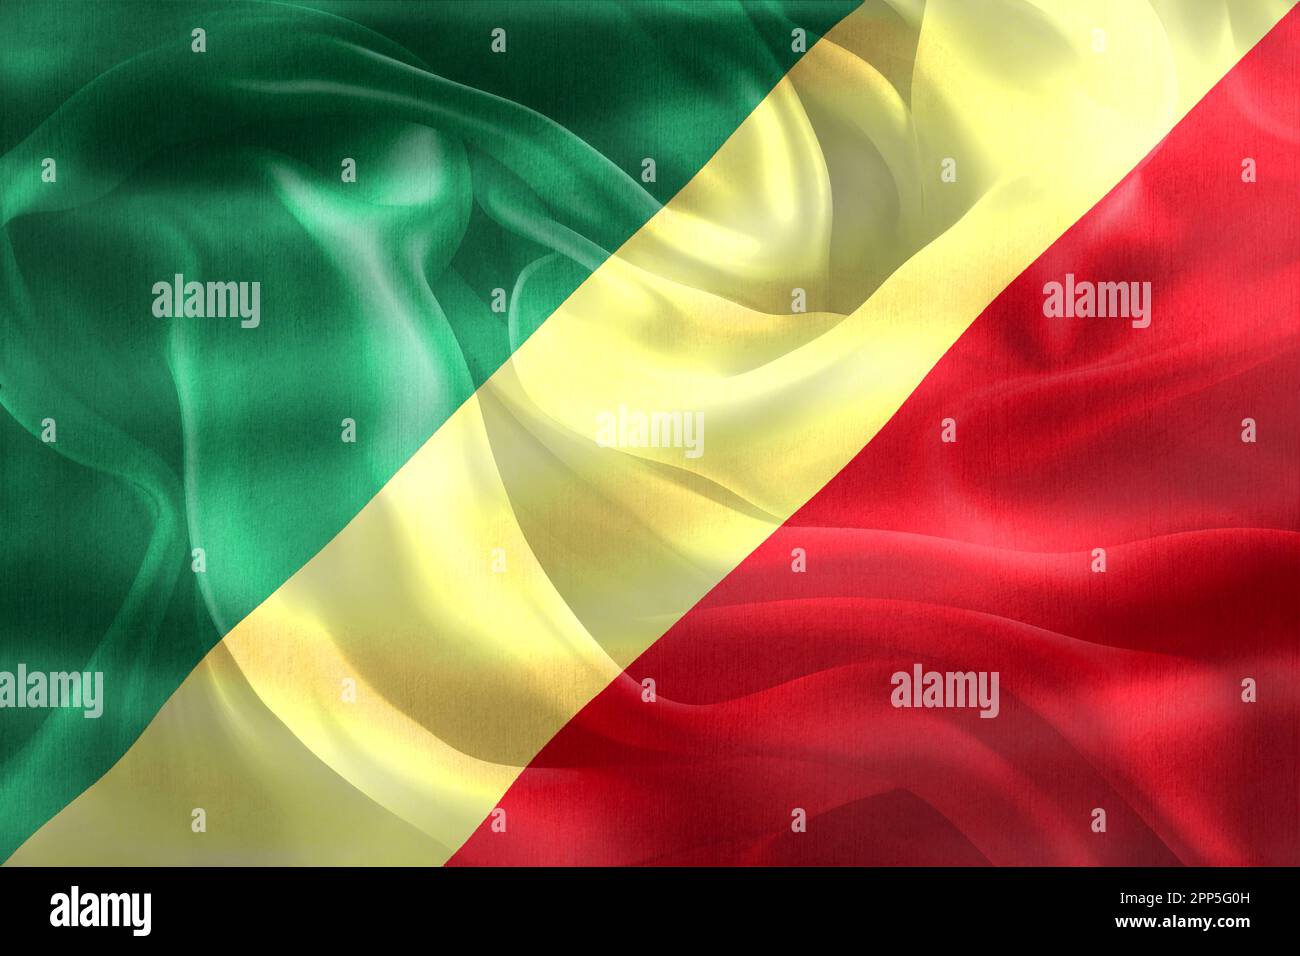 Republic of the Congo flag - realistic waving fabric flag Stock Photo